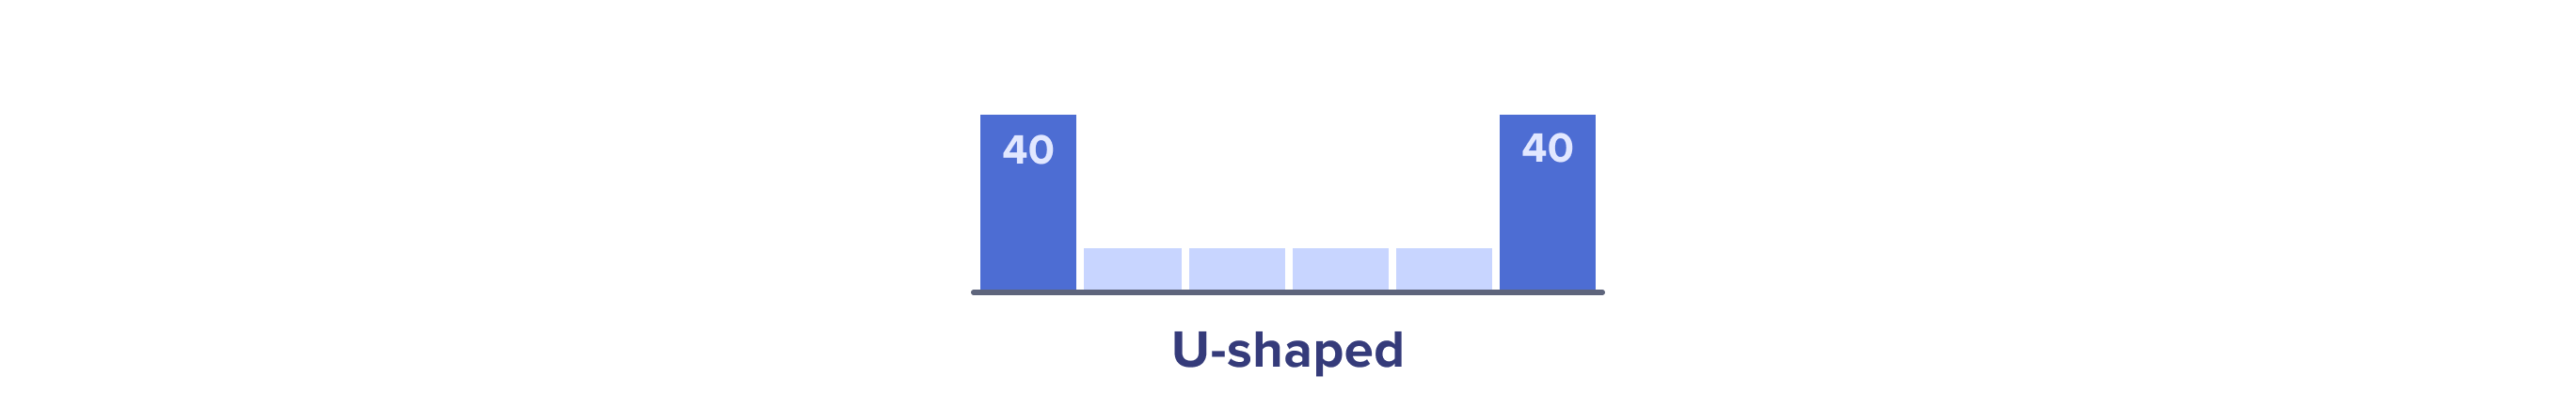 U-shaped attribution model